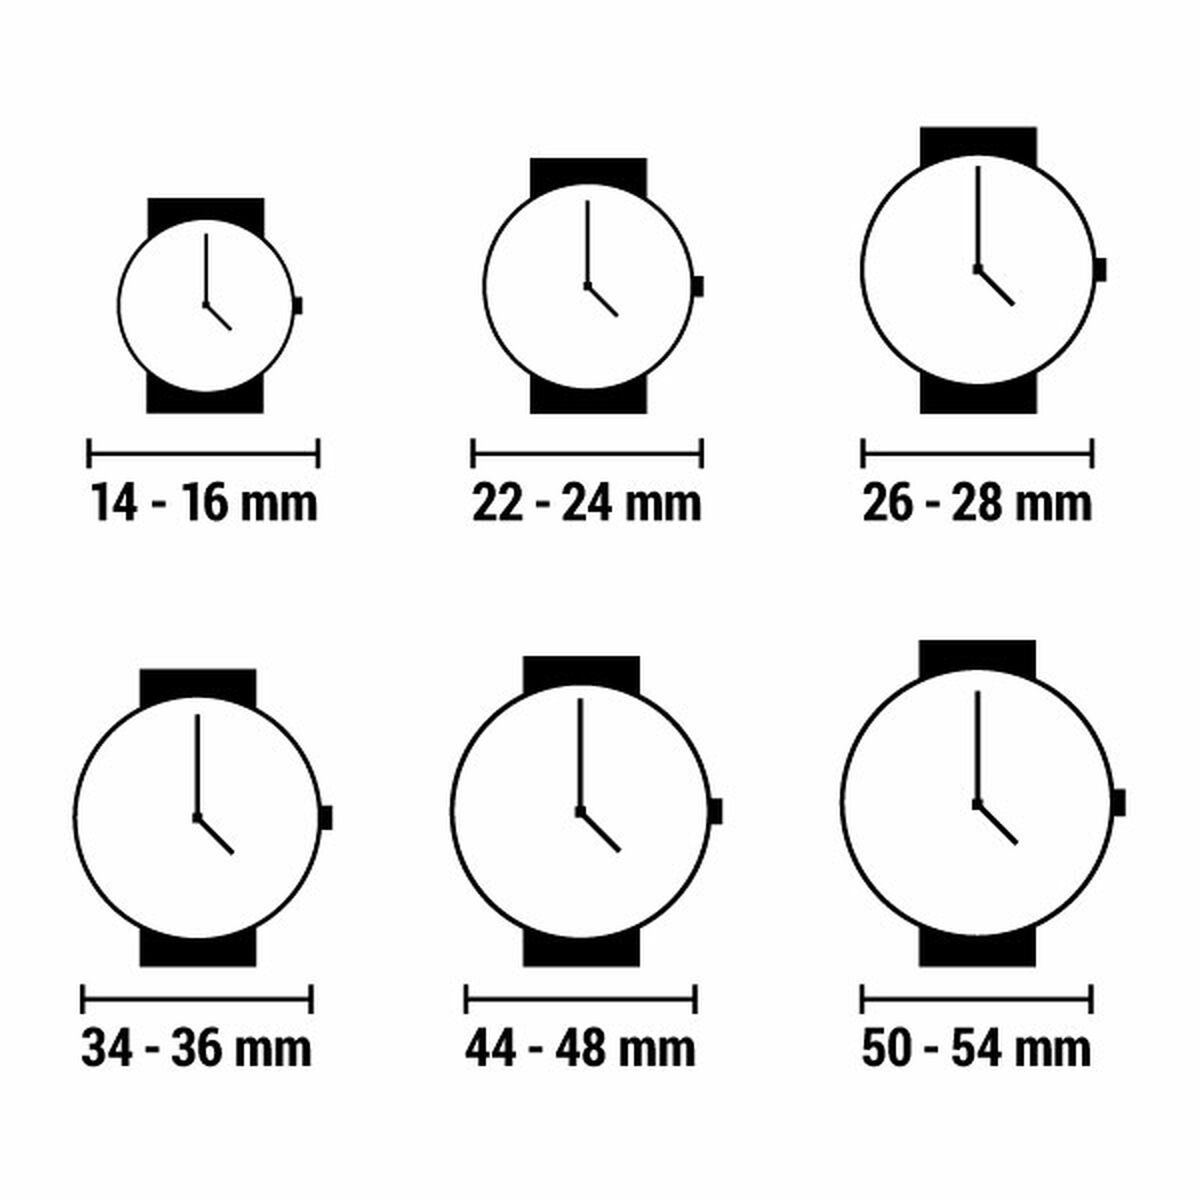 Horloge Dames Chiara Ferragni R1953100509 (Ø 32 mm)